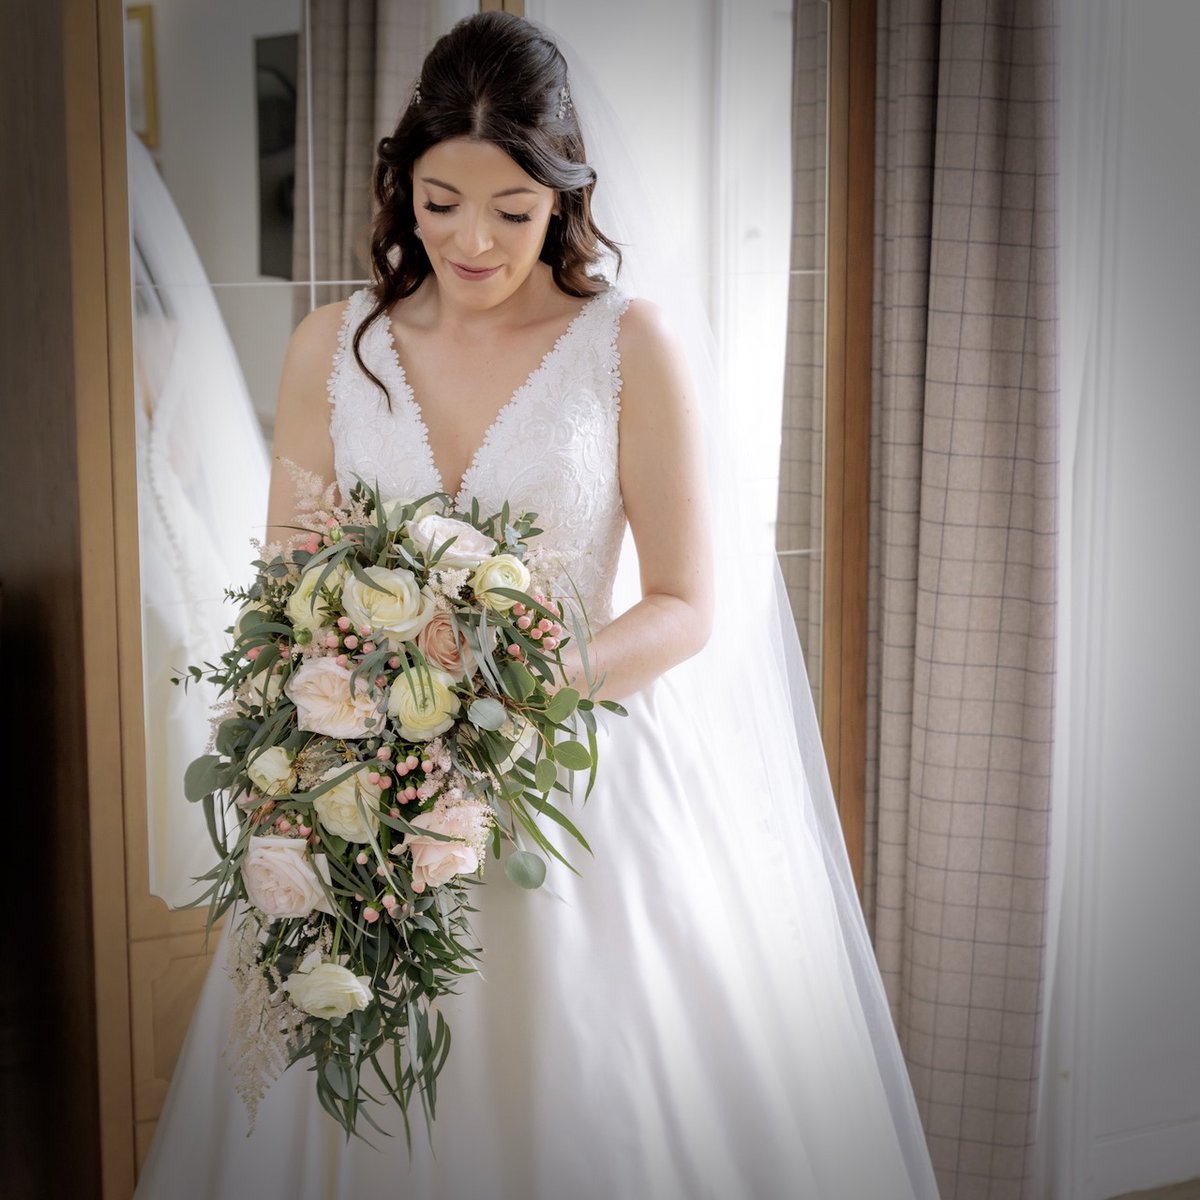 A traditional trailing style bridal bouquet 💍
#WeddingCeremony #CeremonyFlowers #WeddingFlowers #WeddingFlorist #WeddingDayMemories #Hertfordshire #HemelHempstead #MaplesFlowers